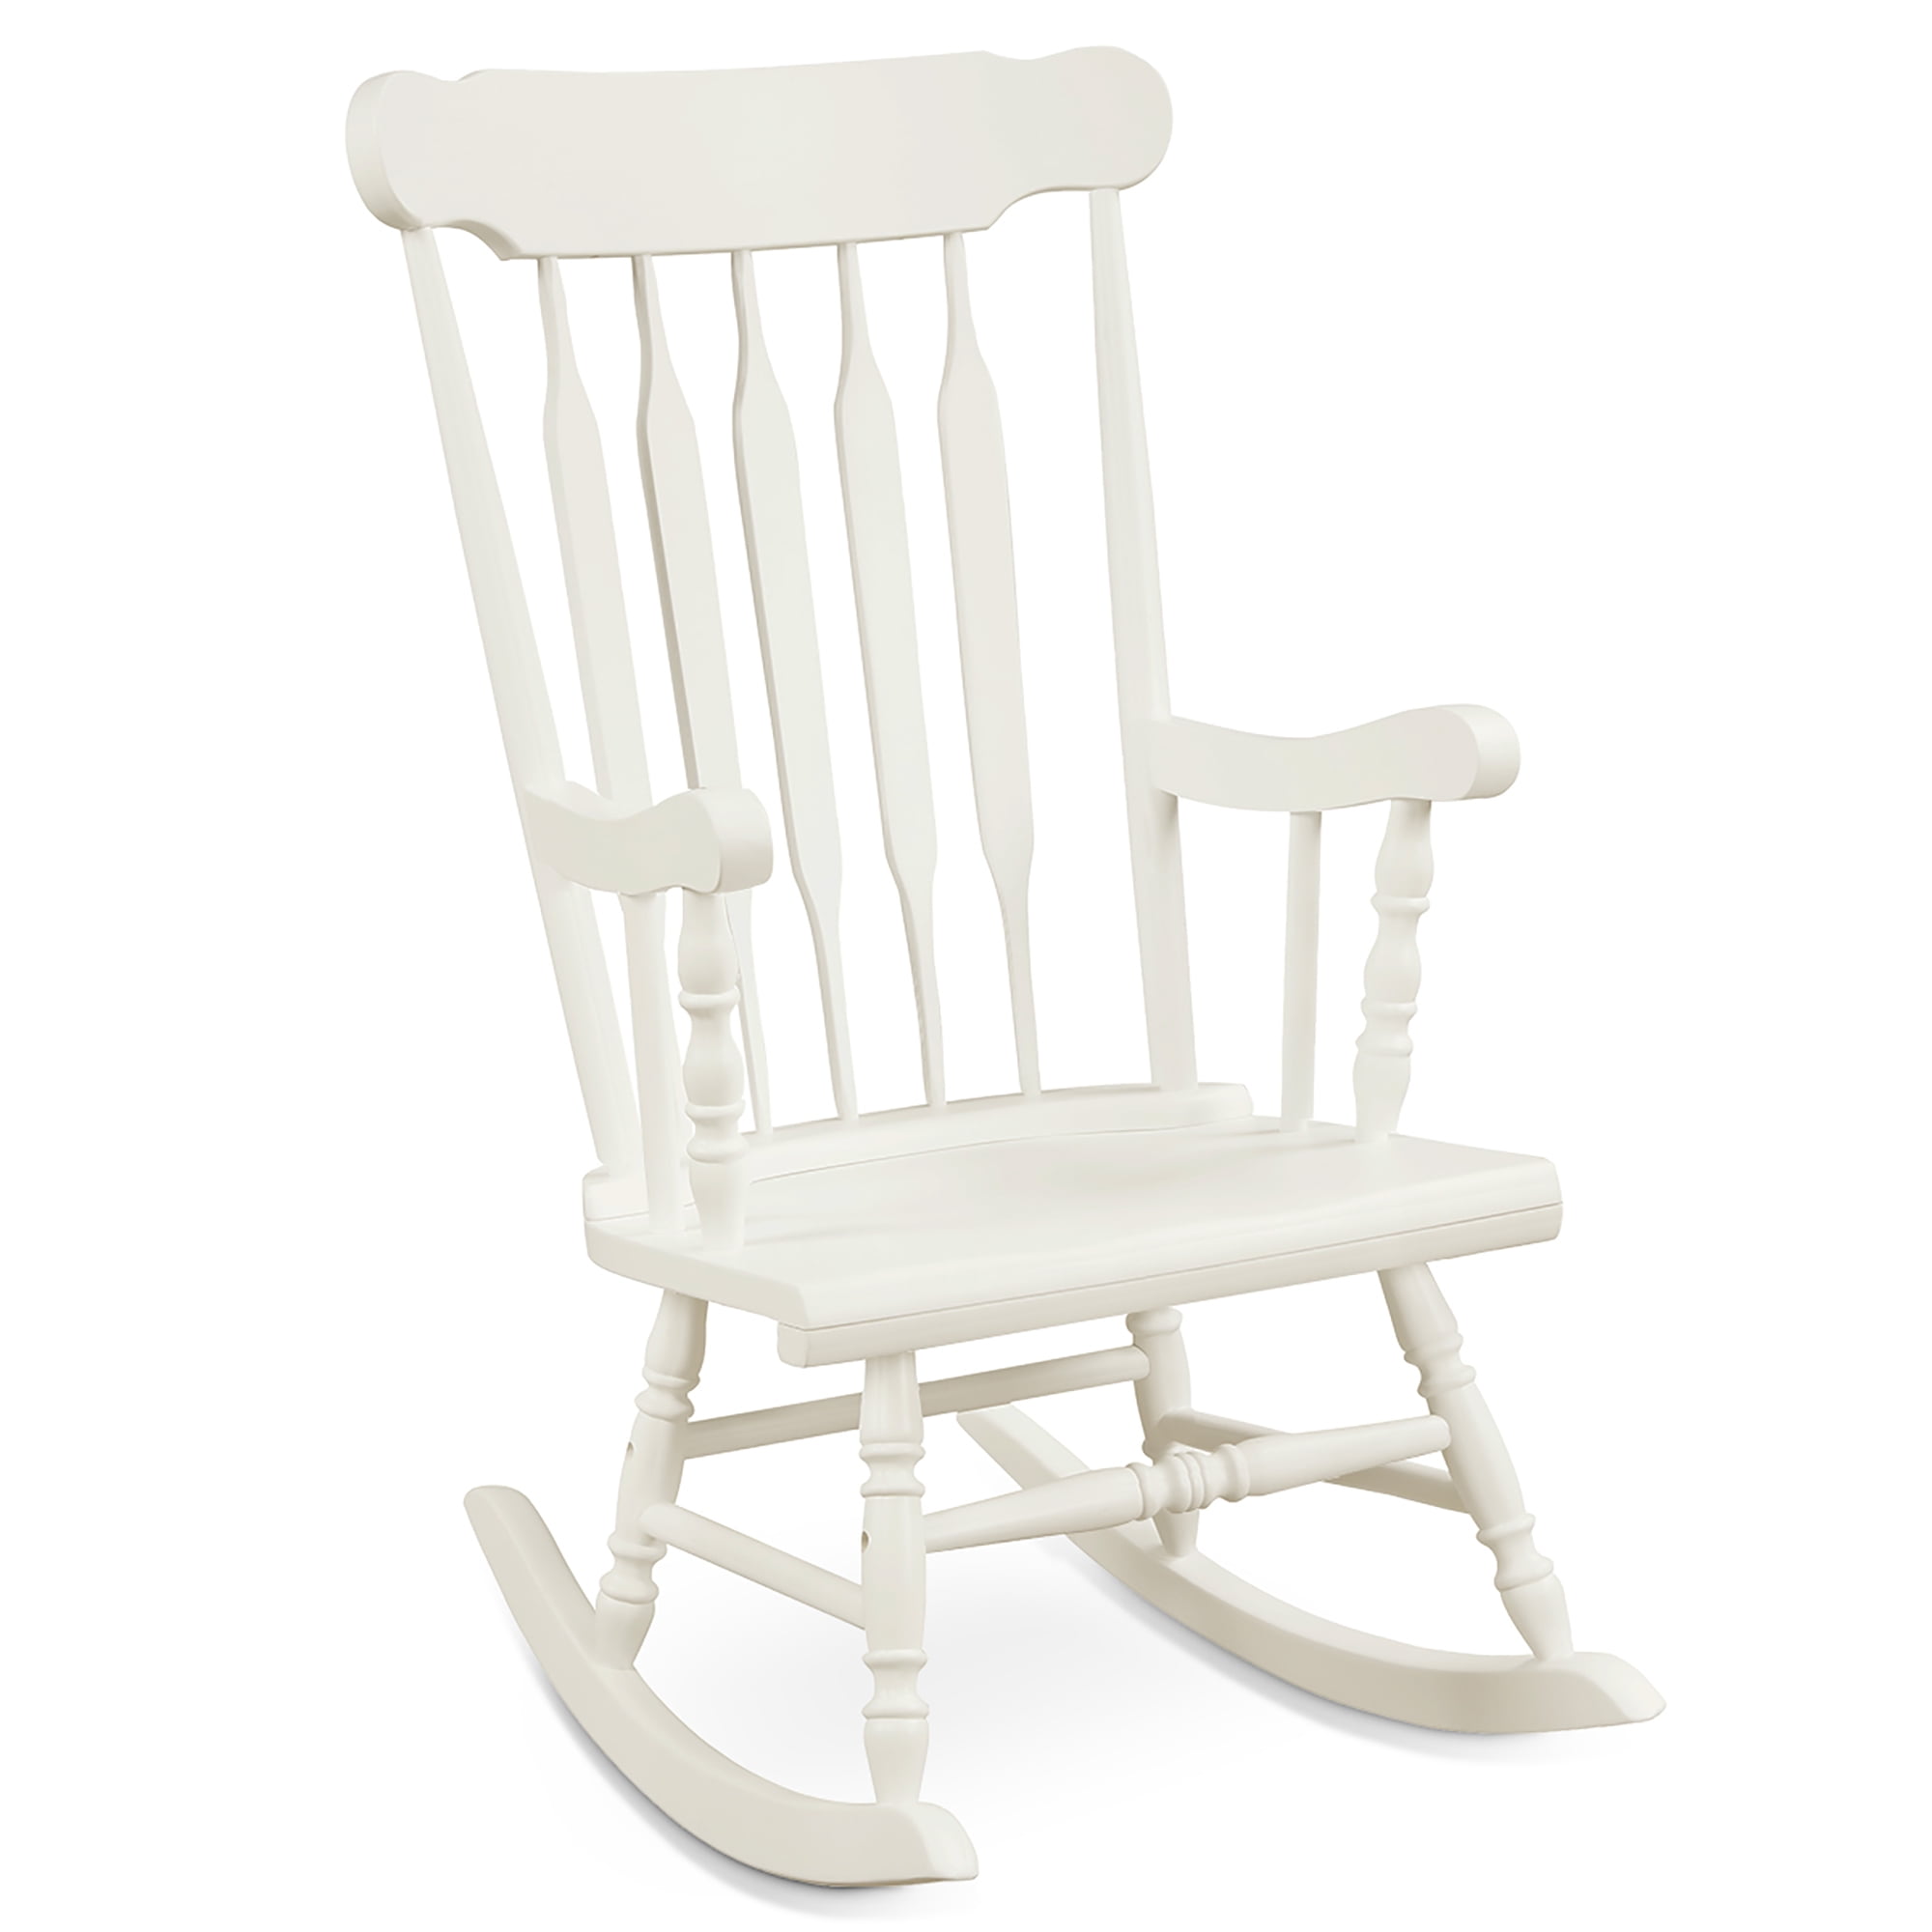 Soleil Jardin Patio Resin Wicker Rocking Chair with Cushions, Outdoor  Furniture Club Rocker Chair, Gray Wicker  Navy Cushions - Walmart.com